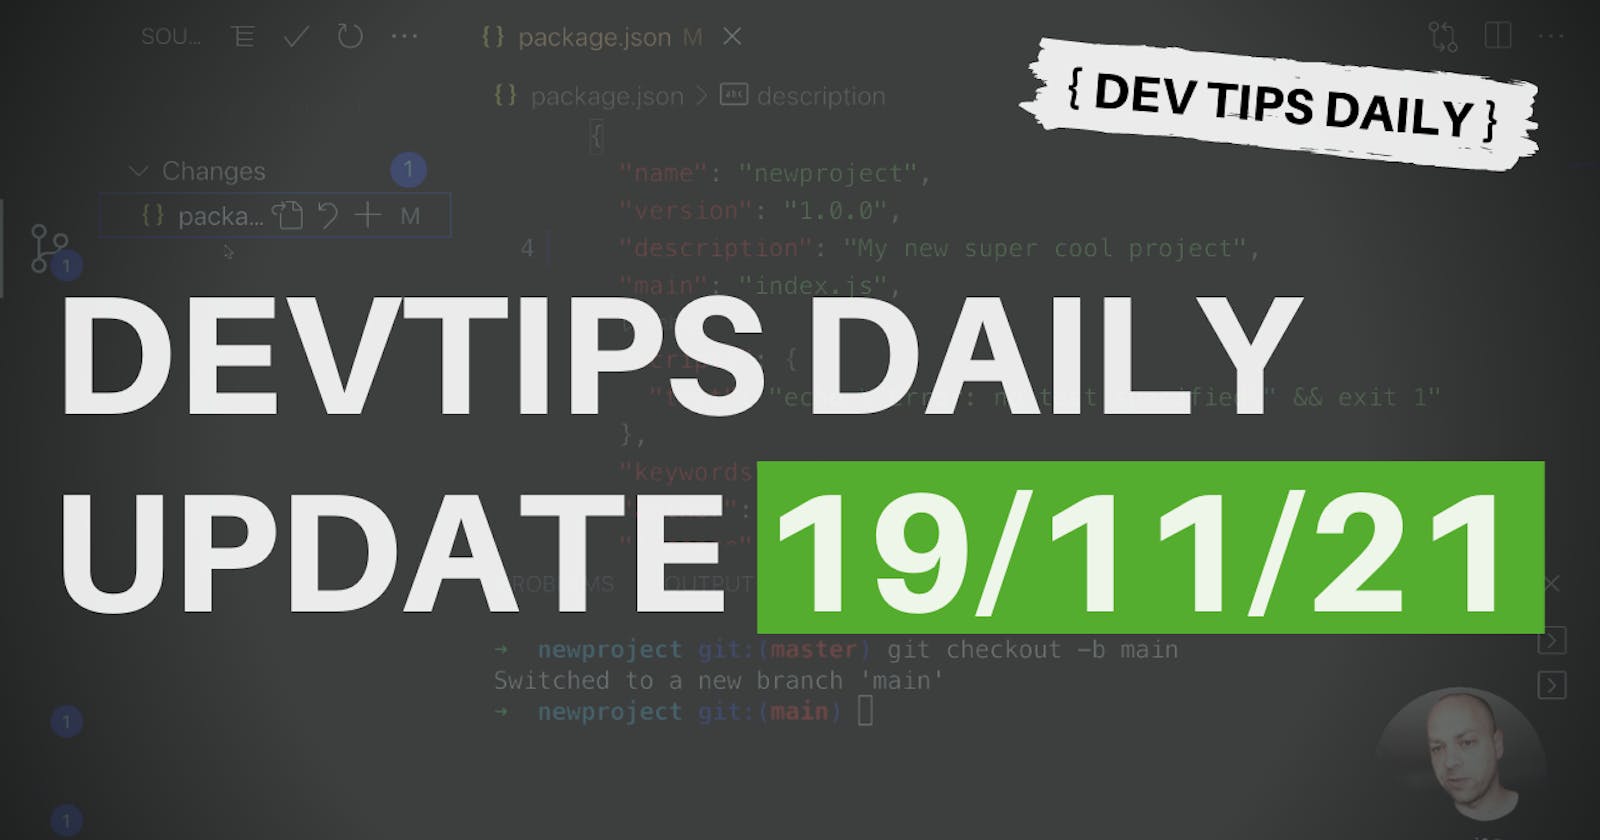 DevTips Daily Update 19/11/21